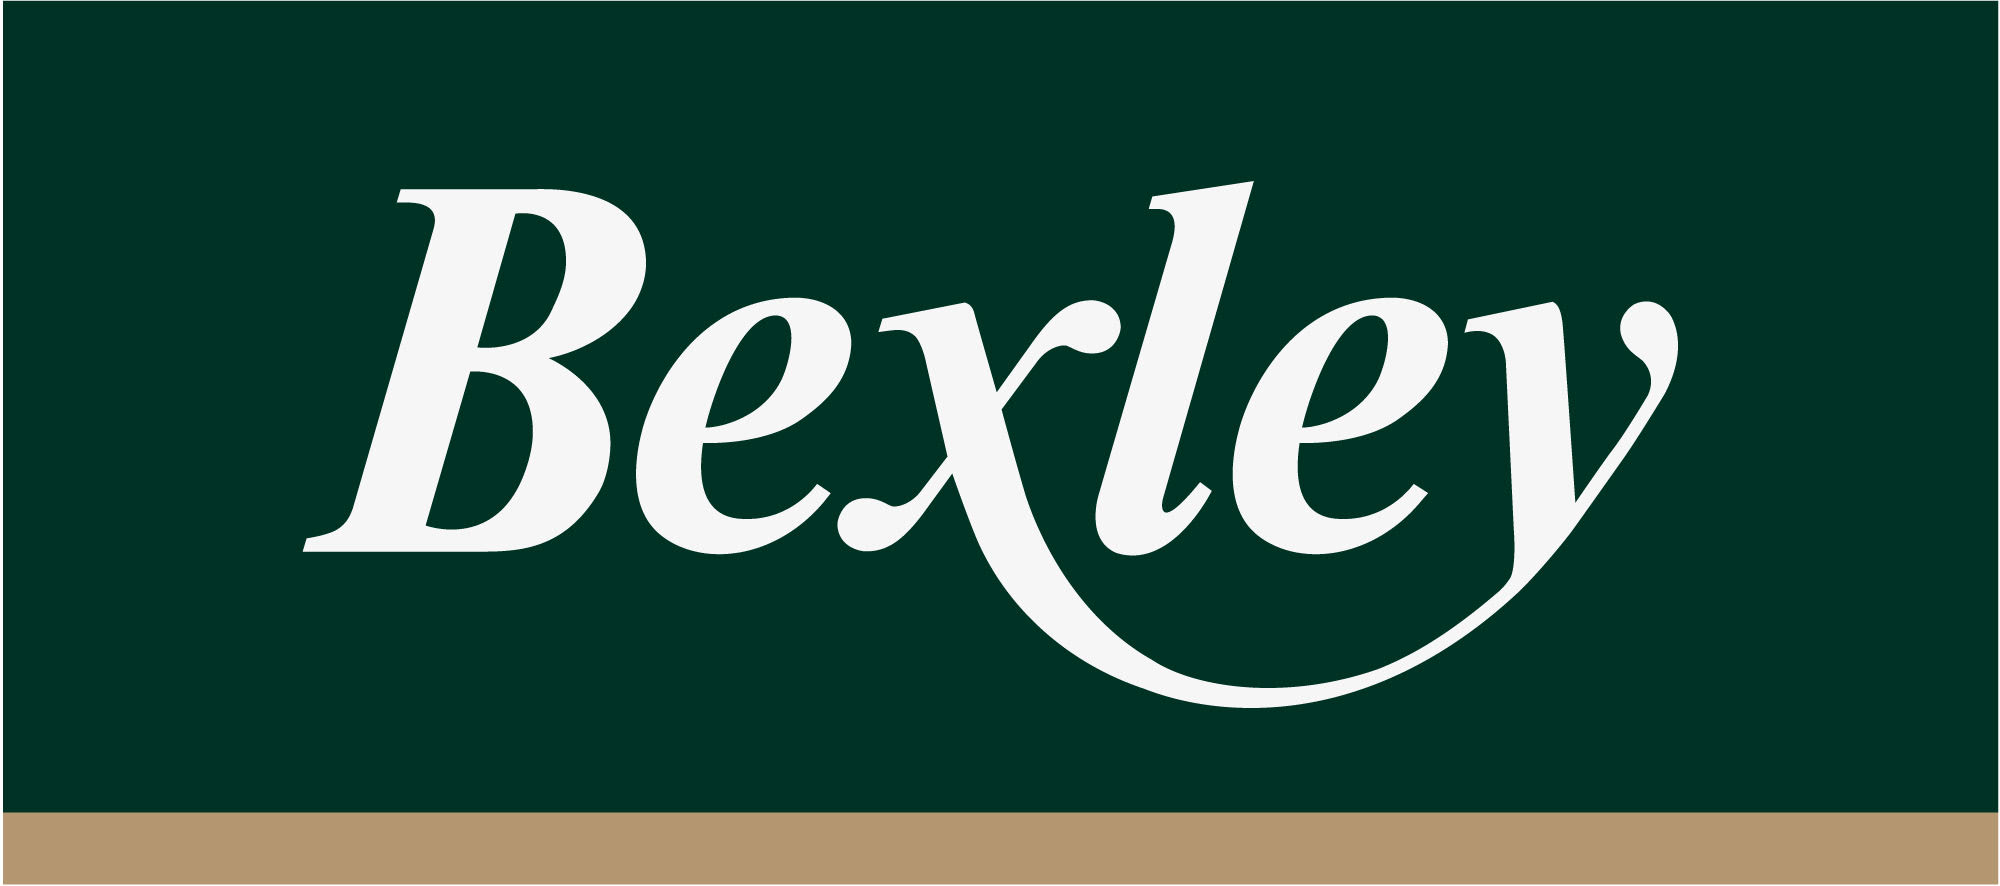 Logo Bexley